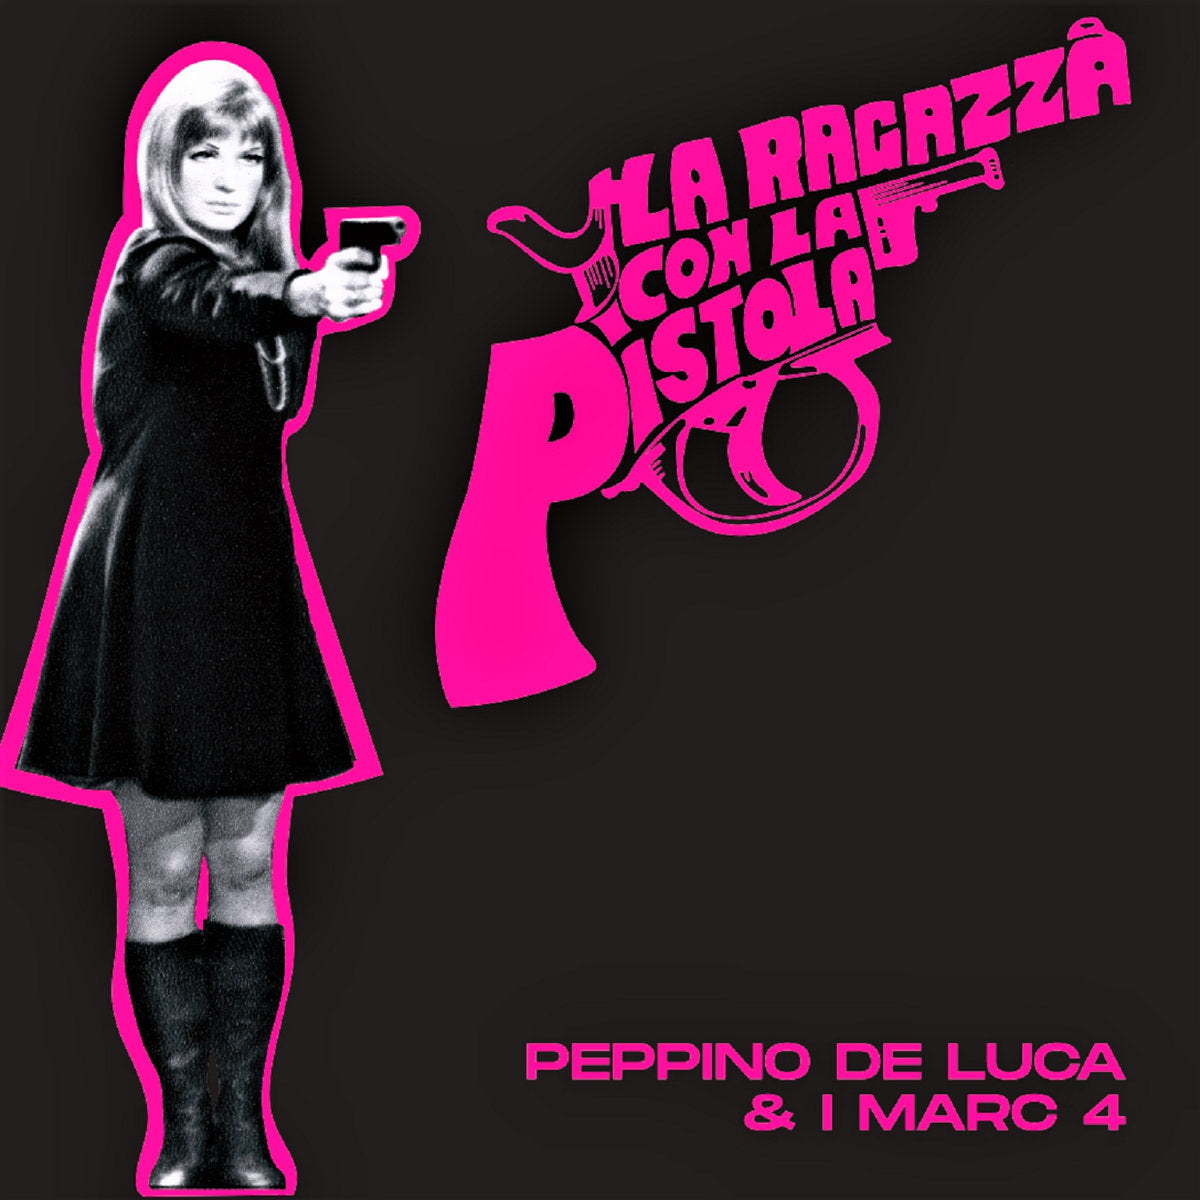 Peppino De Luca - La ragazza con la pistola [7"]